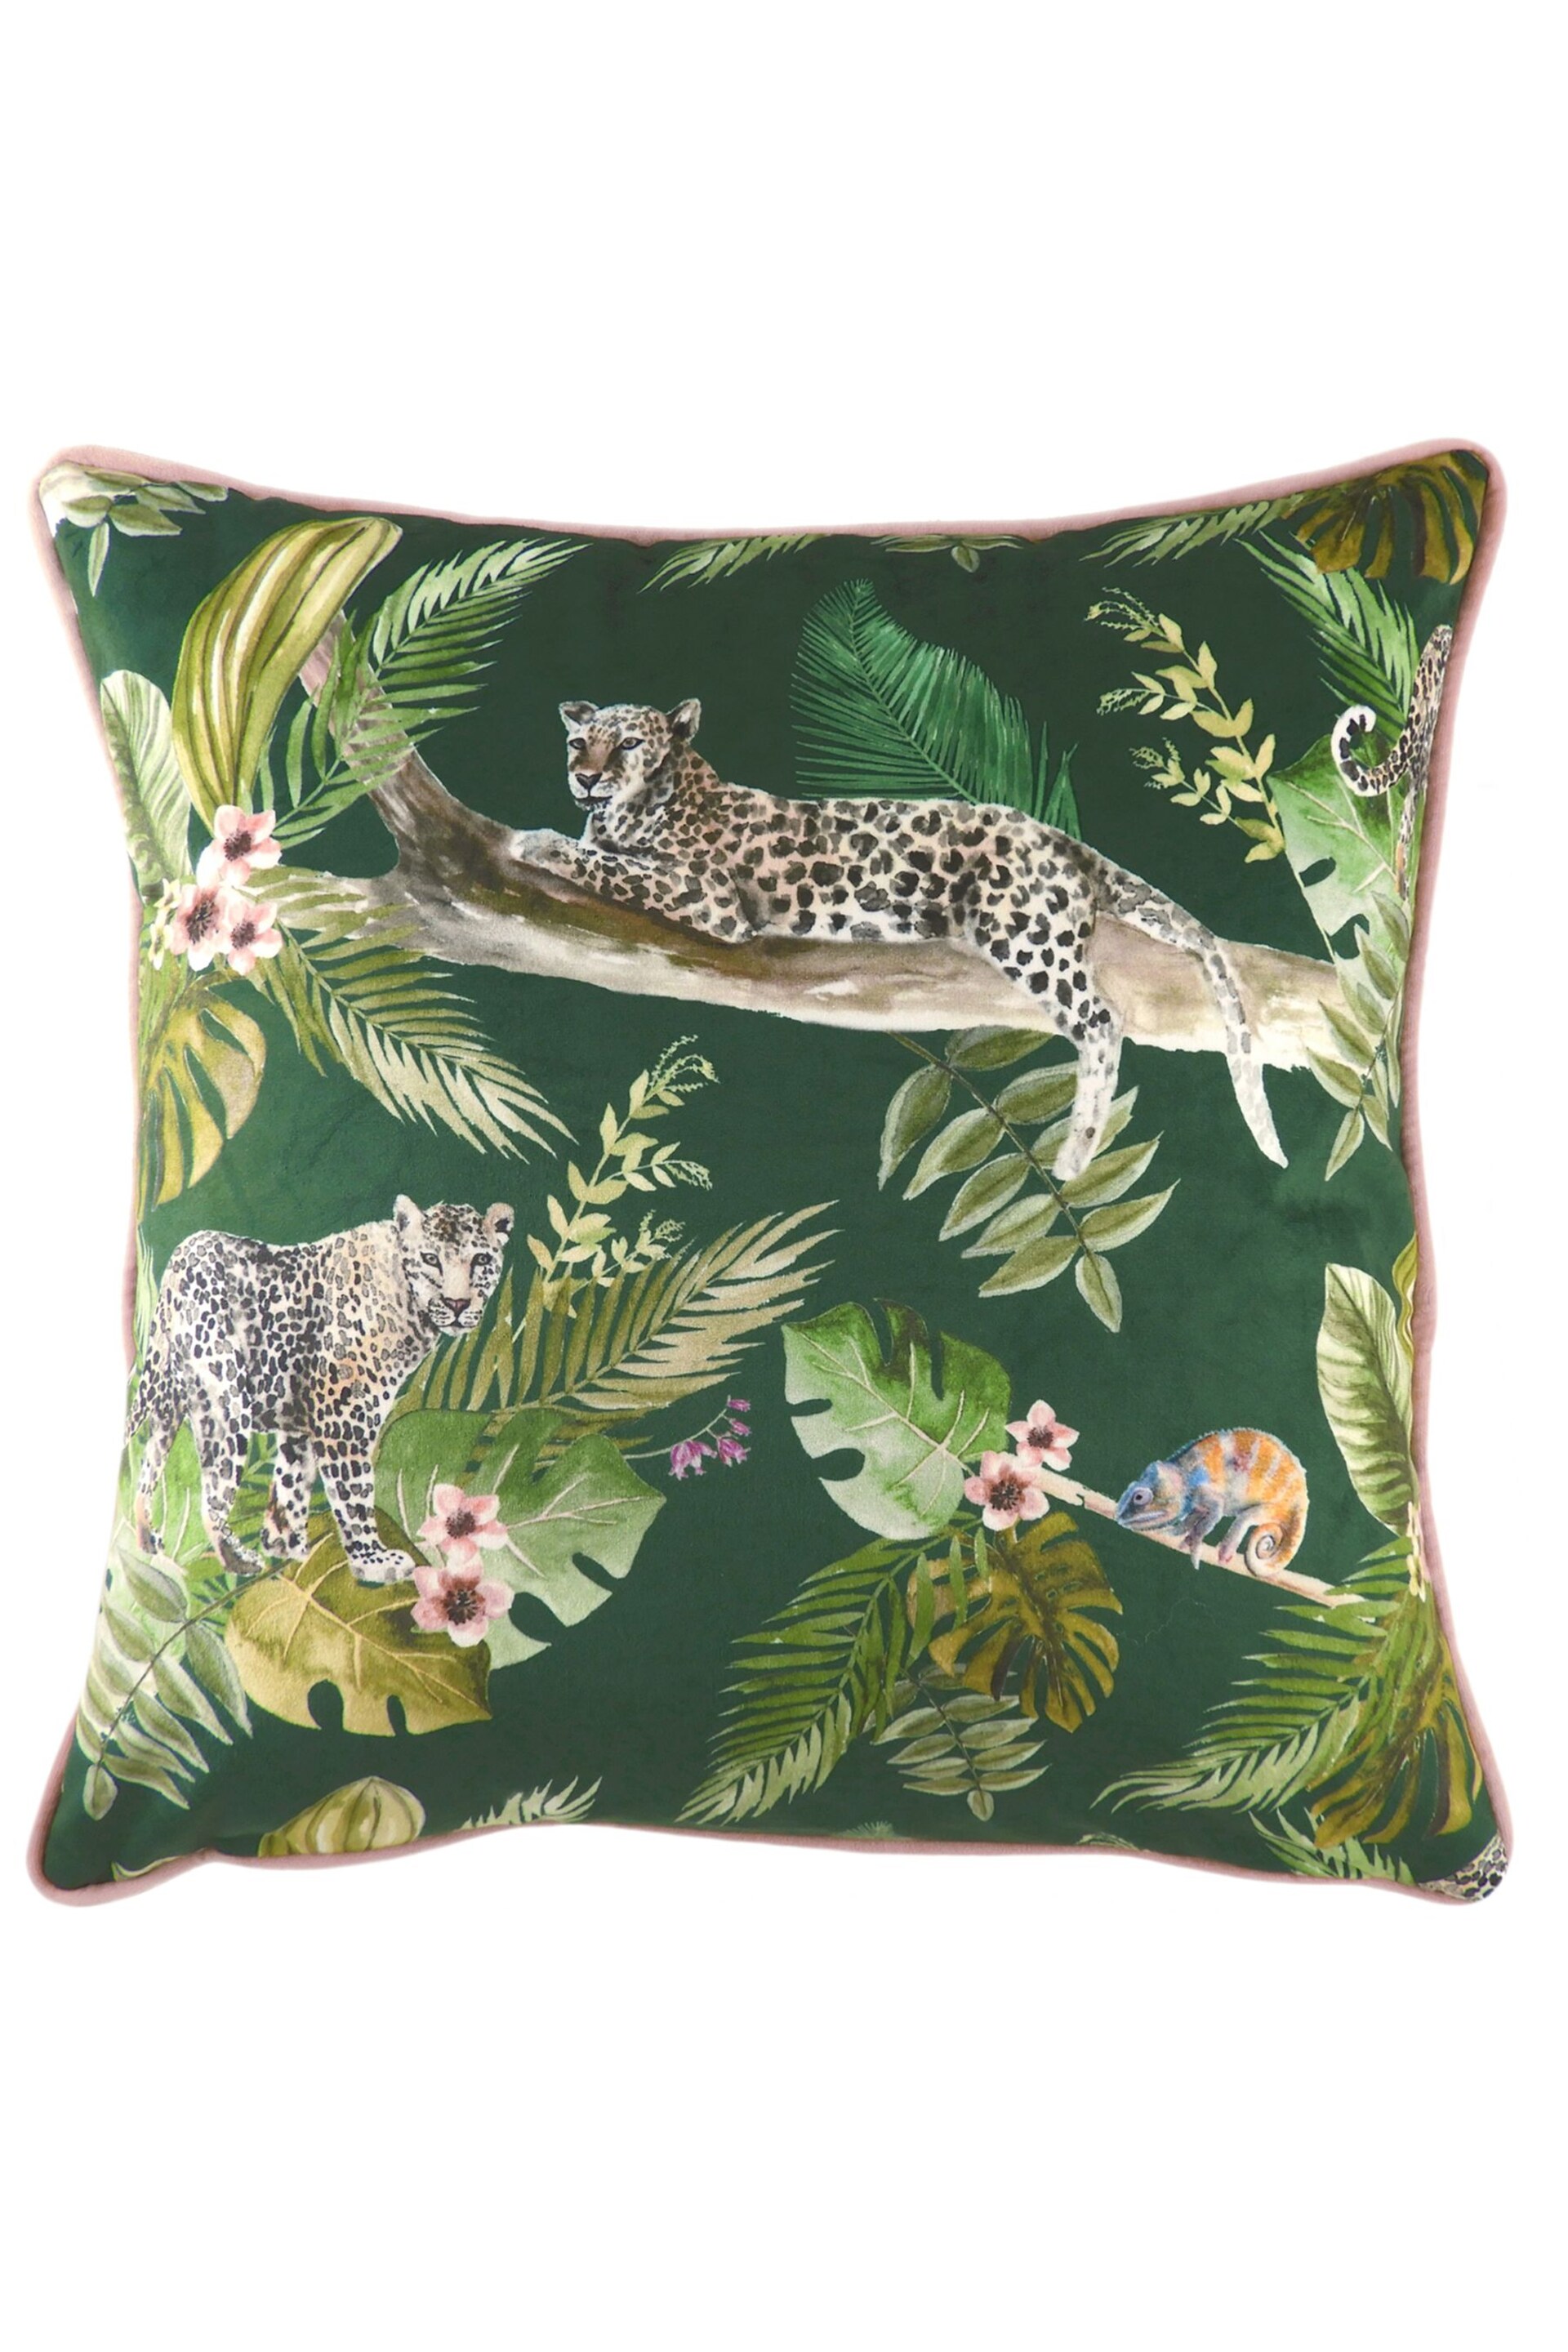 Evans Lichfield Green Jungle Leopard Velvet Polyester Filled Cushion - Image 1 of 2